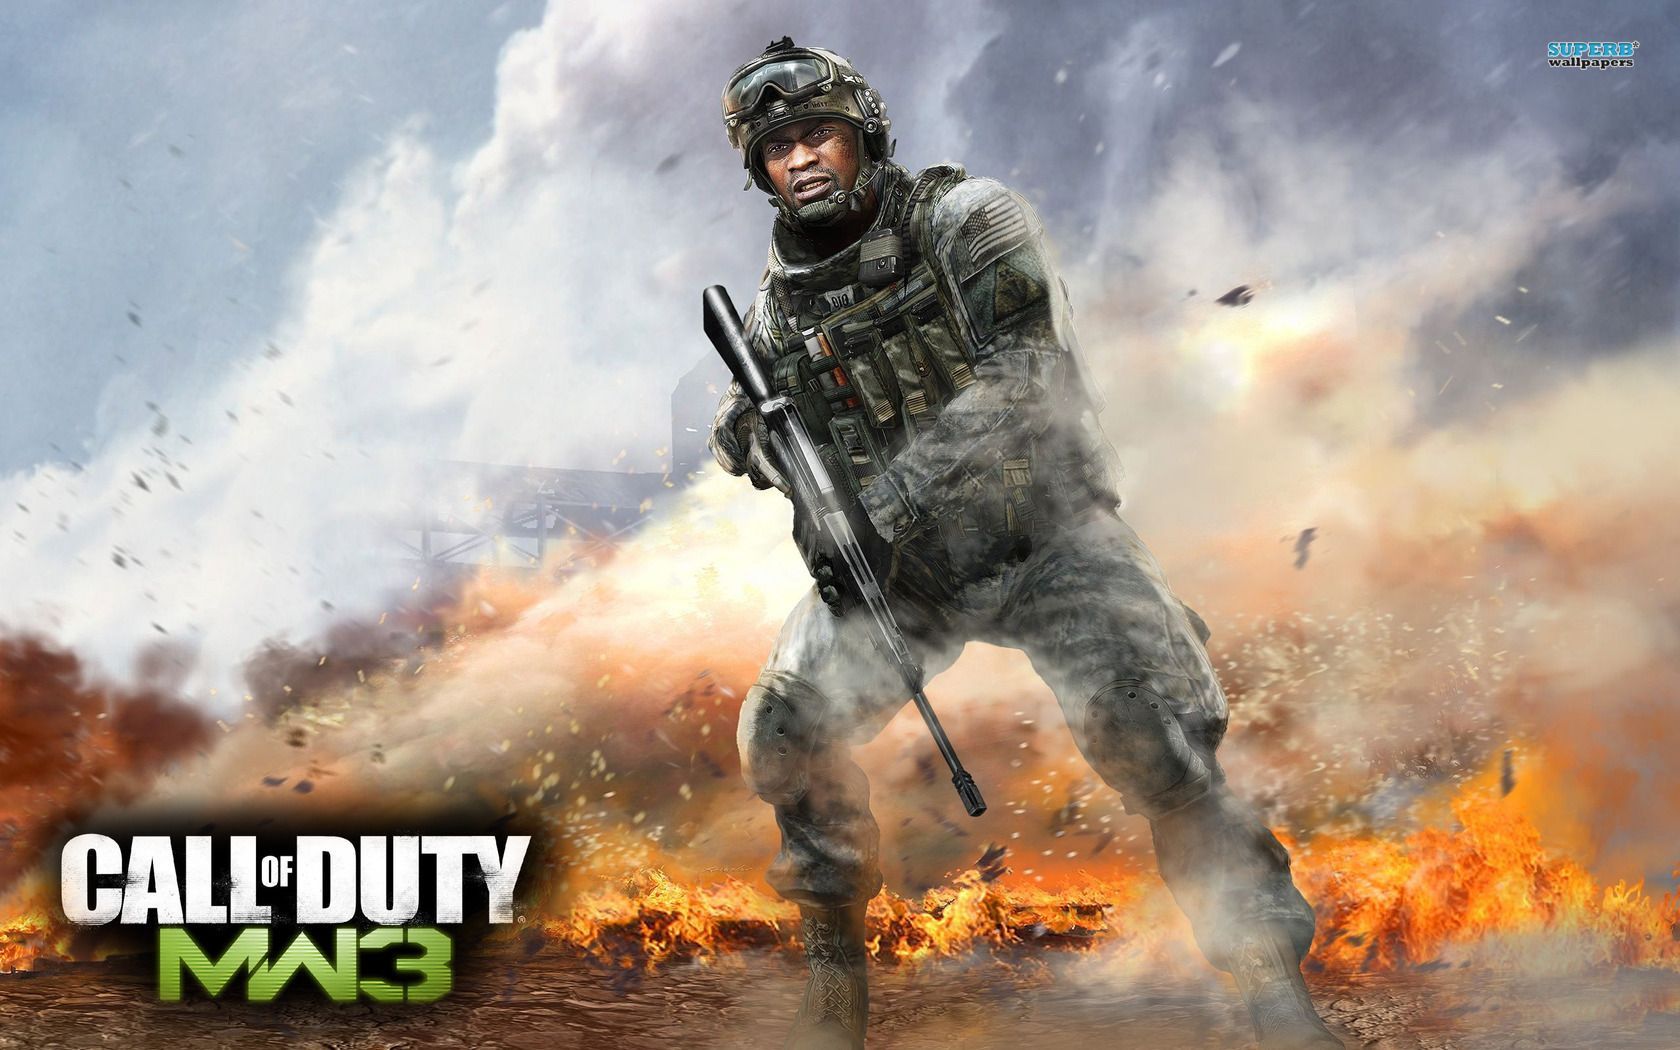 Call of Duty Modern Warfare 3 wallpaper - Game wallpapers